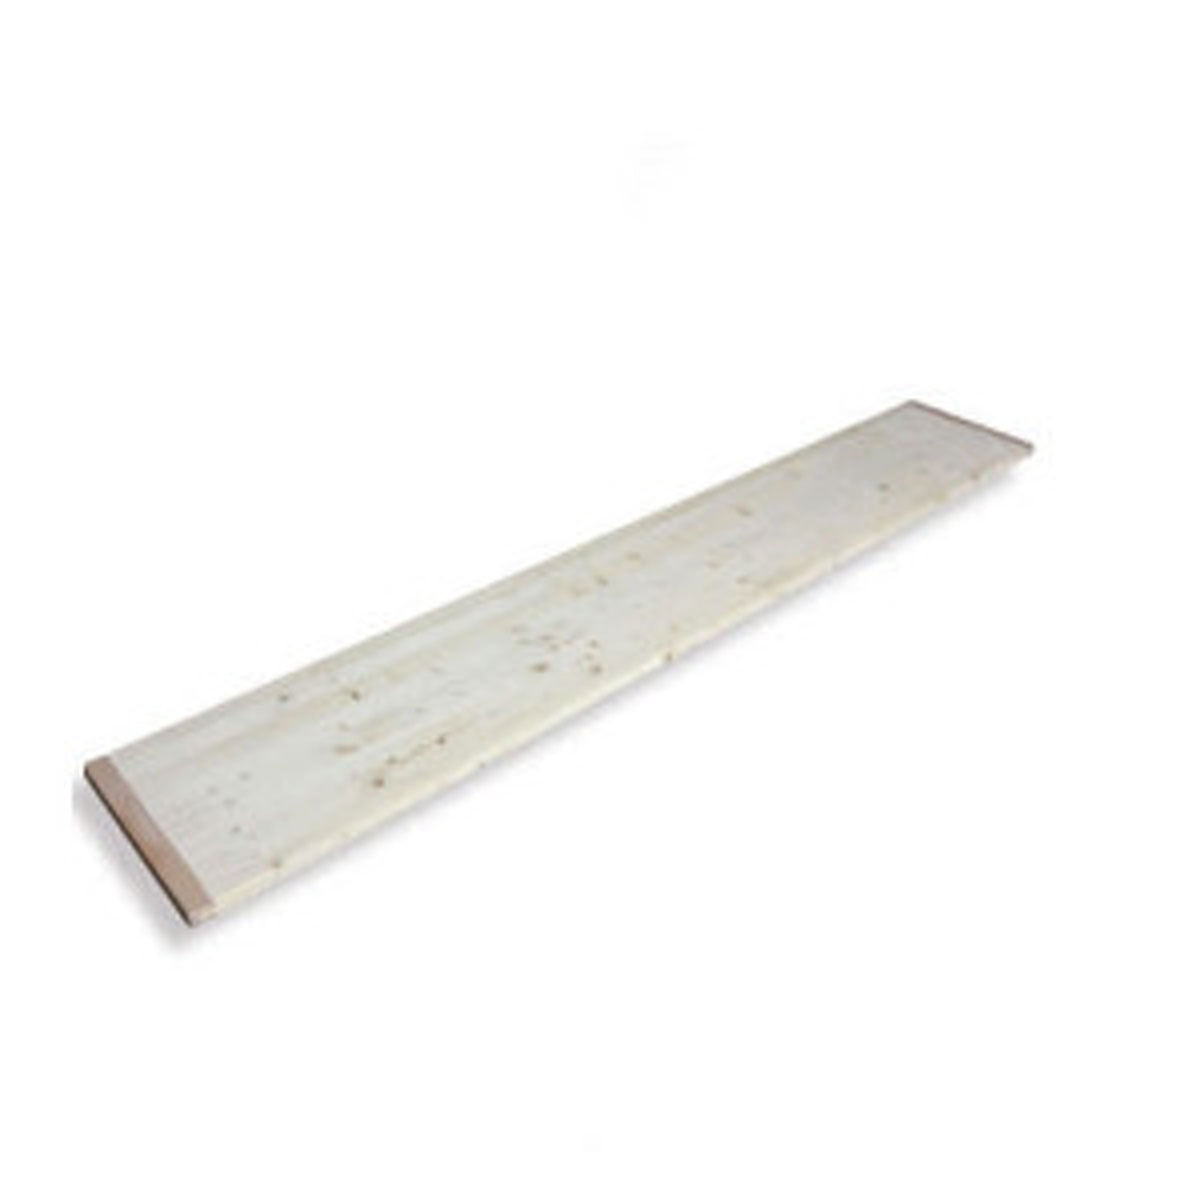 Certified wooden board for bread proofing